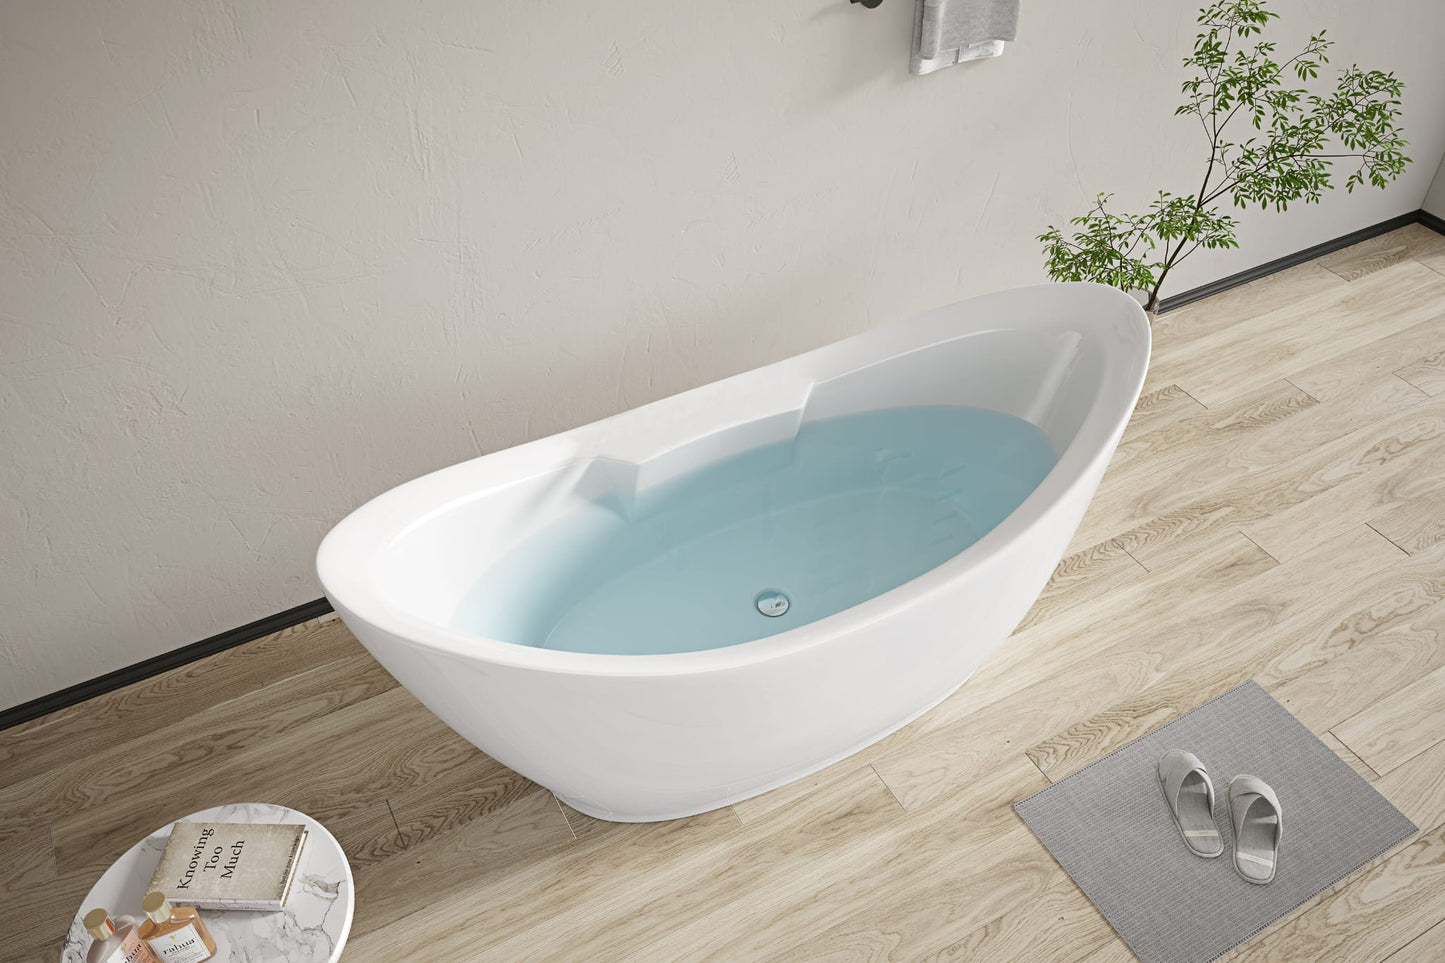 F&D RL-MF-1208 Free standing bath tub 70"X32"X30"